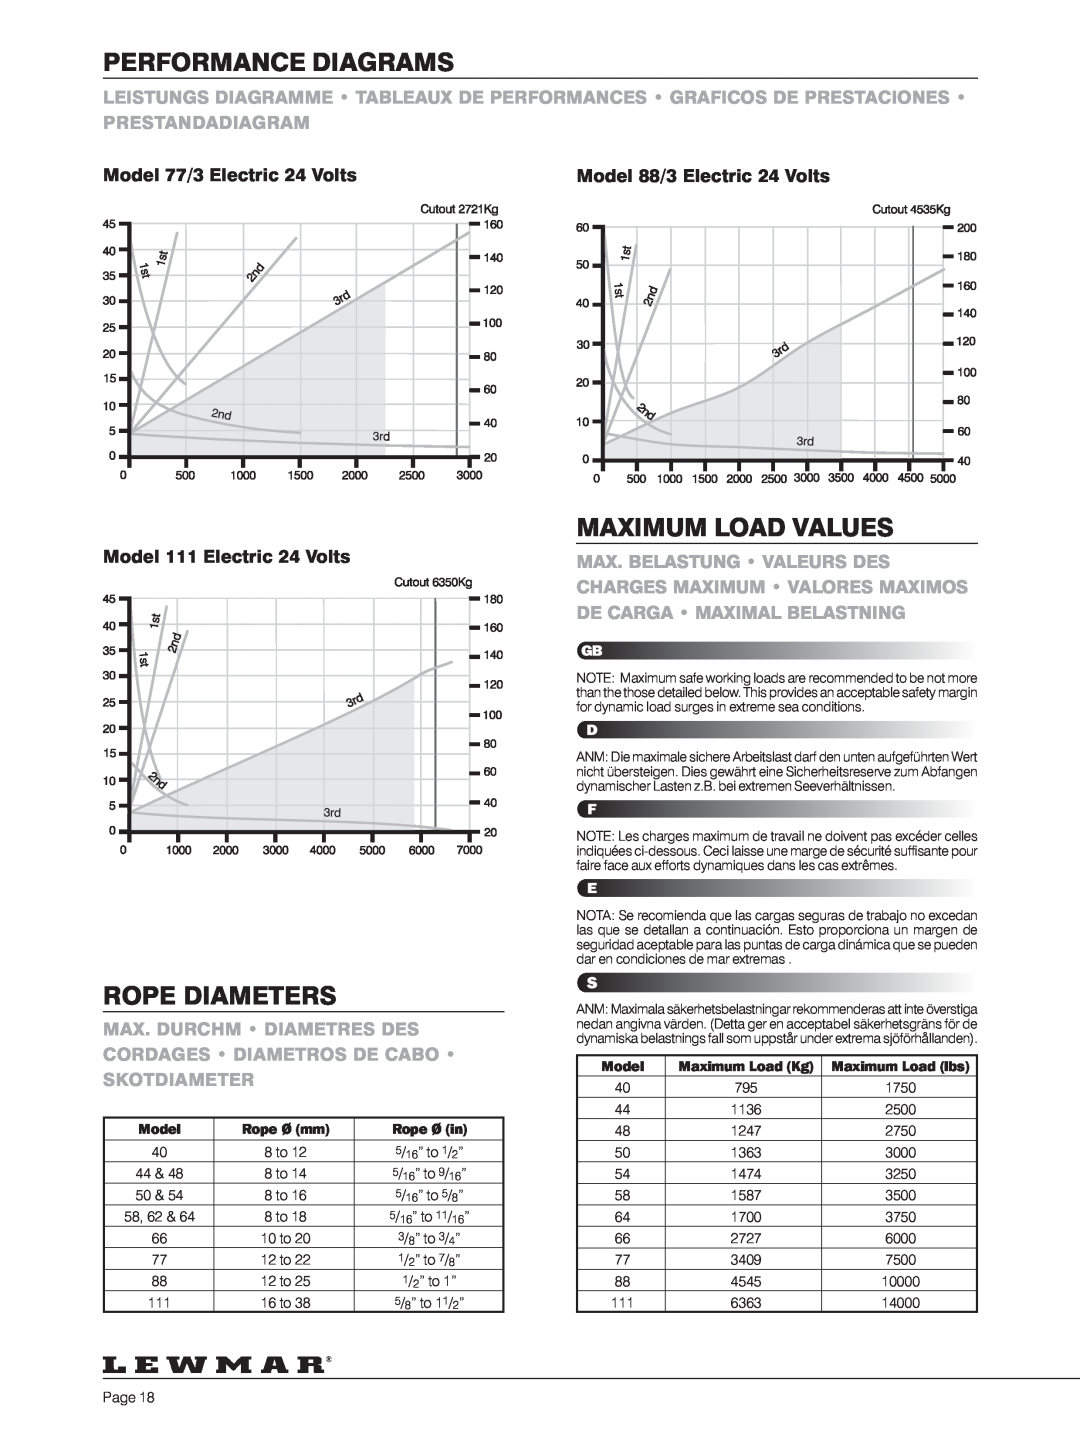 Lewmar 40-111 manual Rope Diameters, Maximum Load Values, Performance Diagrams, Model 77/3 Electric 24 Volts 